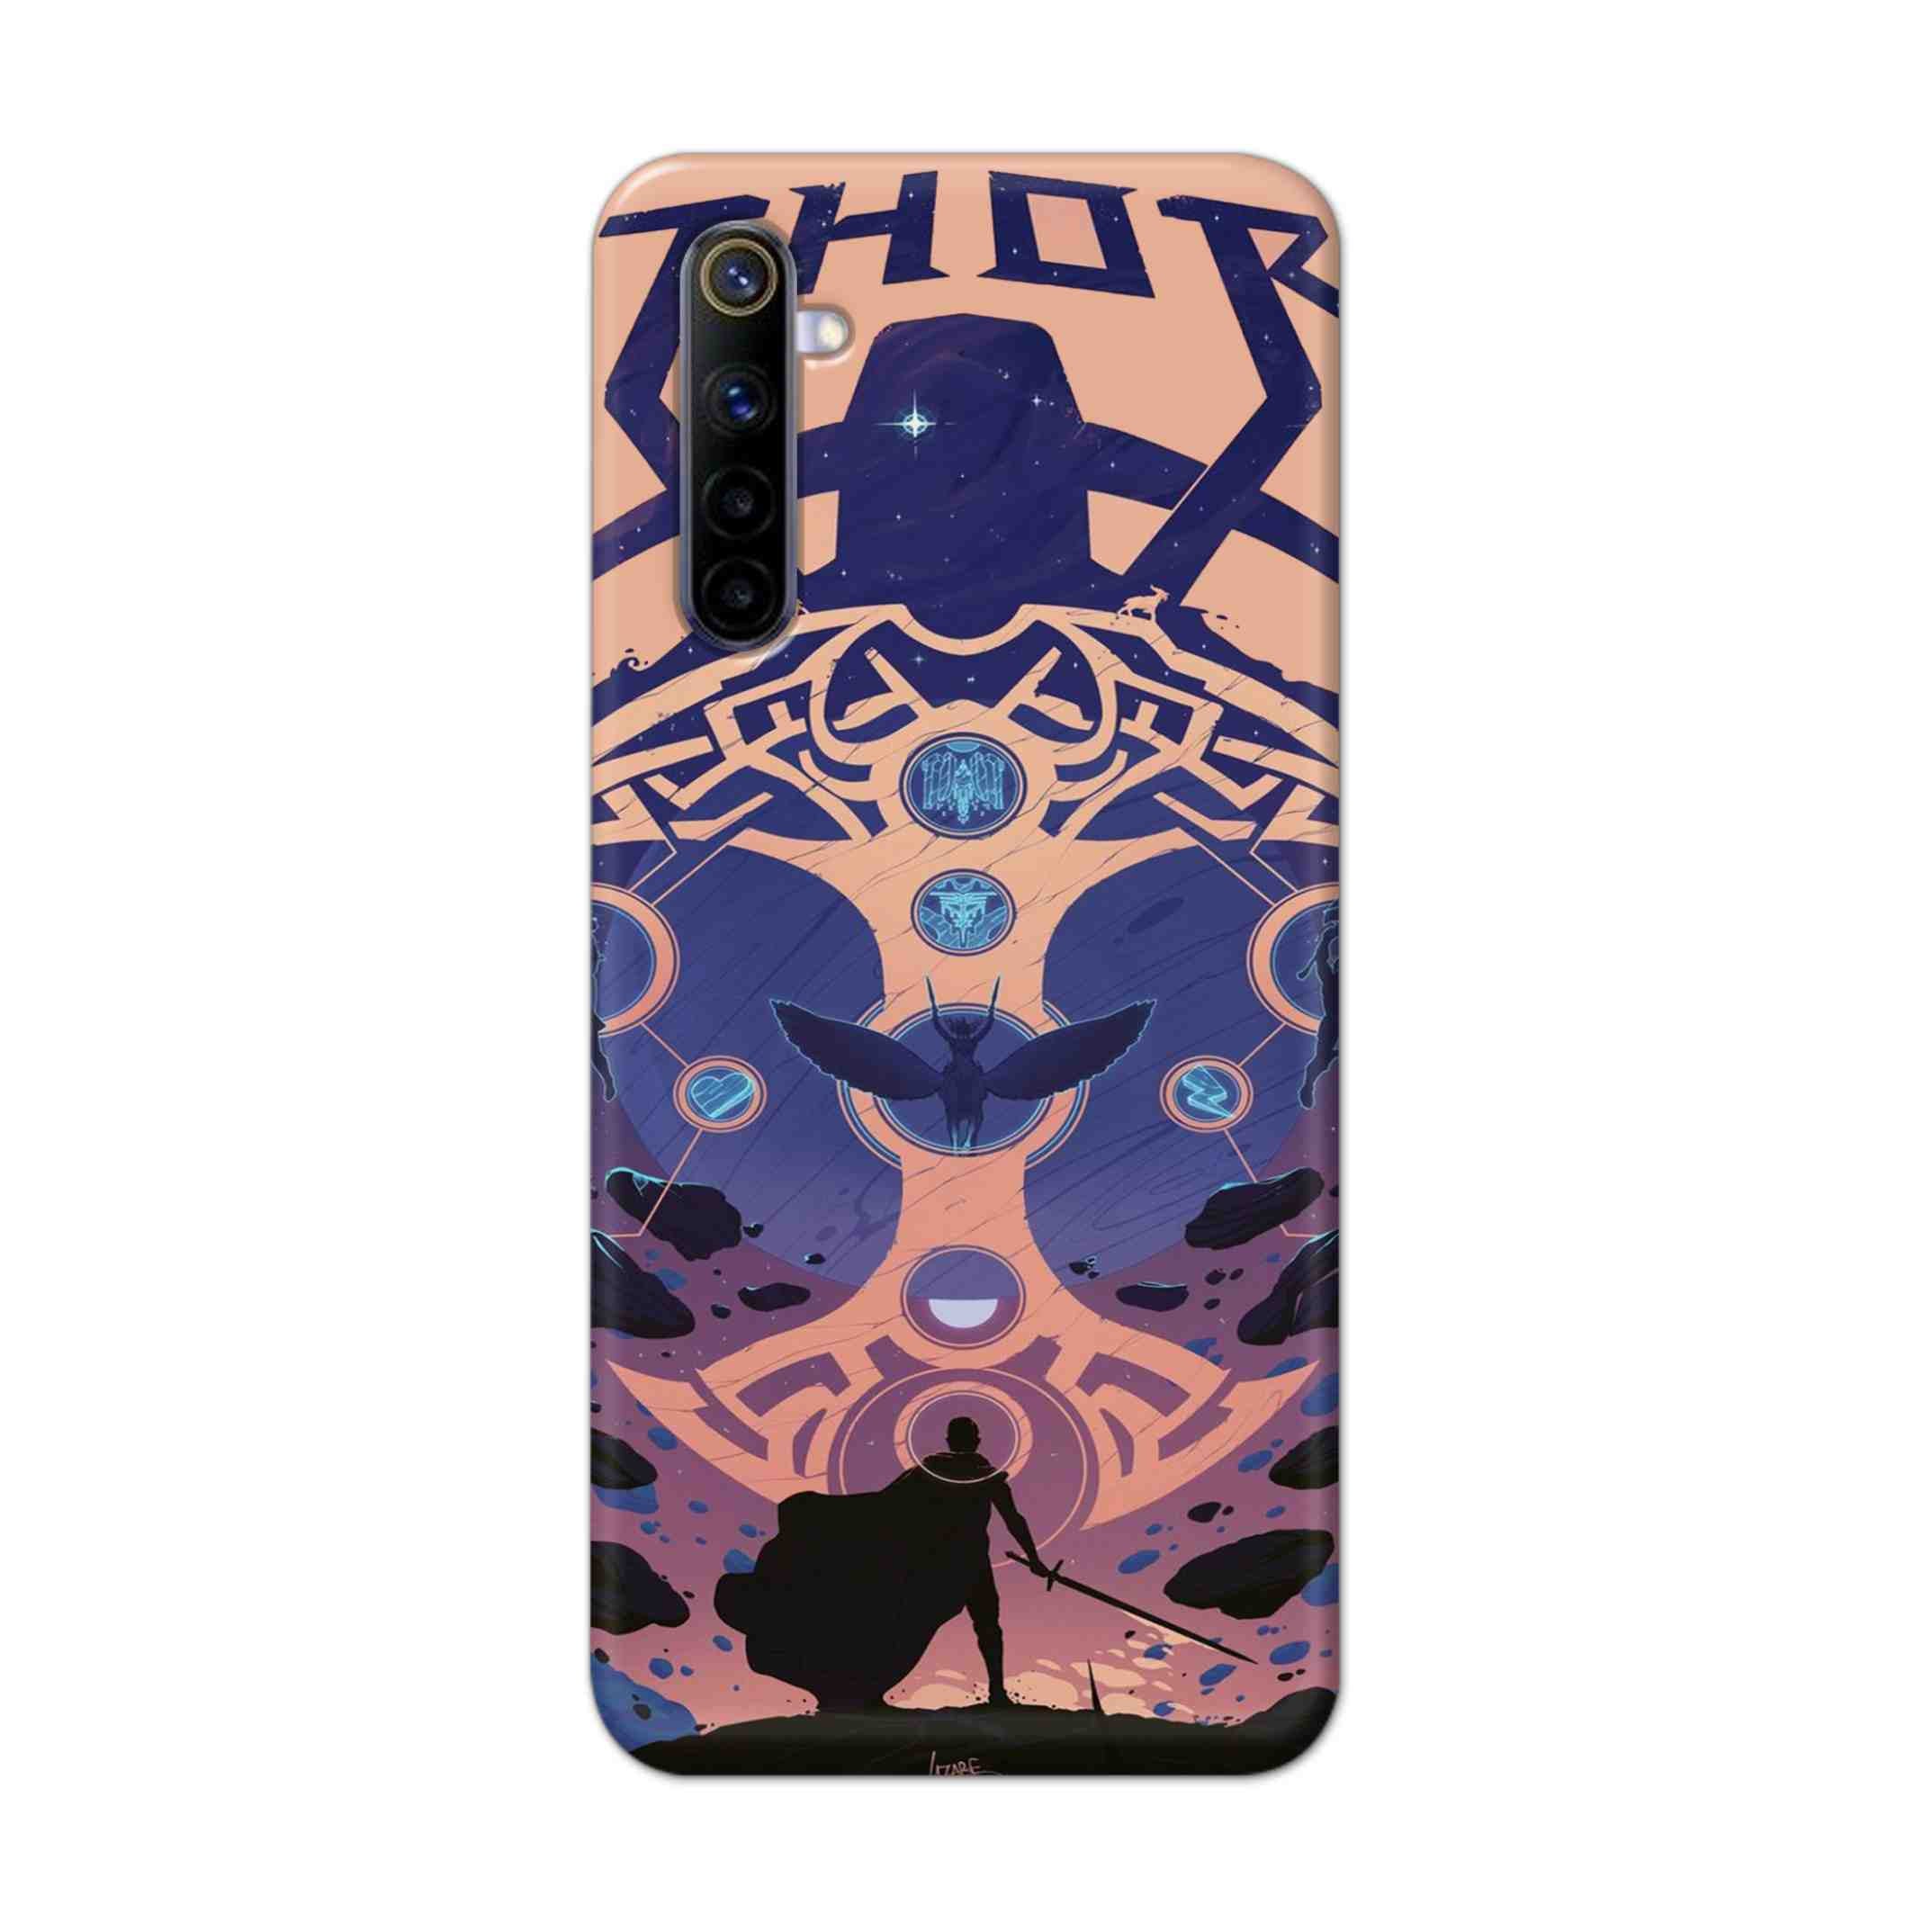 Buy Thor Hard Back Mobile Phone Case Cover For REALME 6 PRO Online